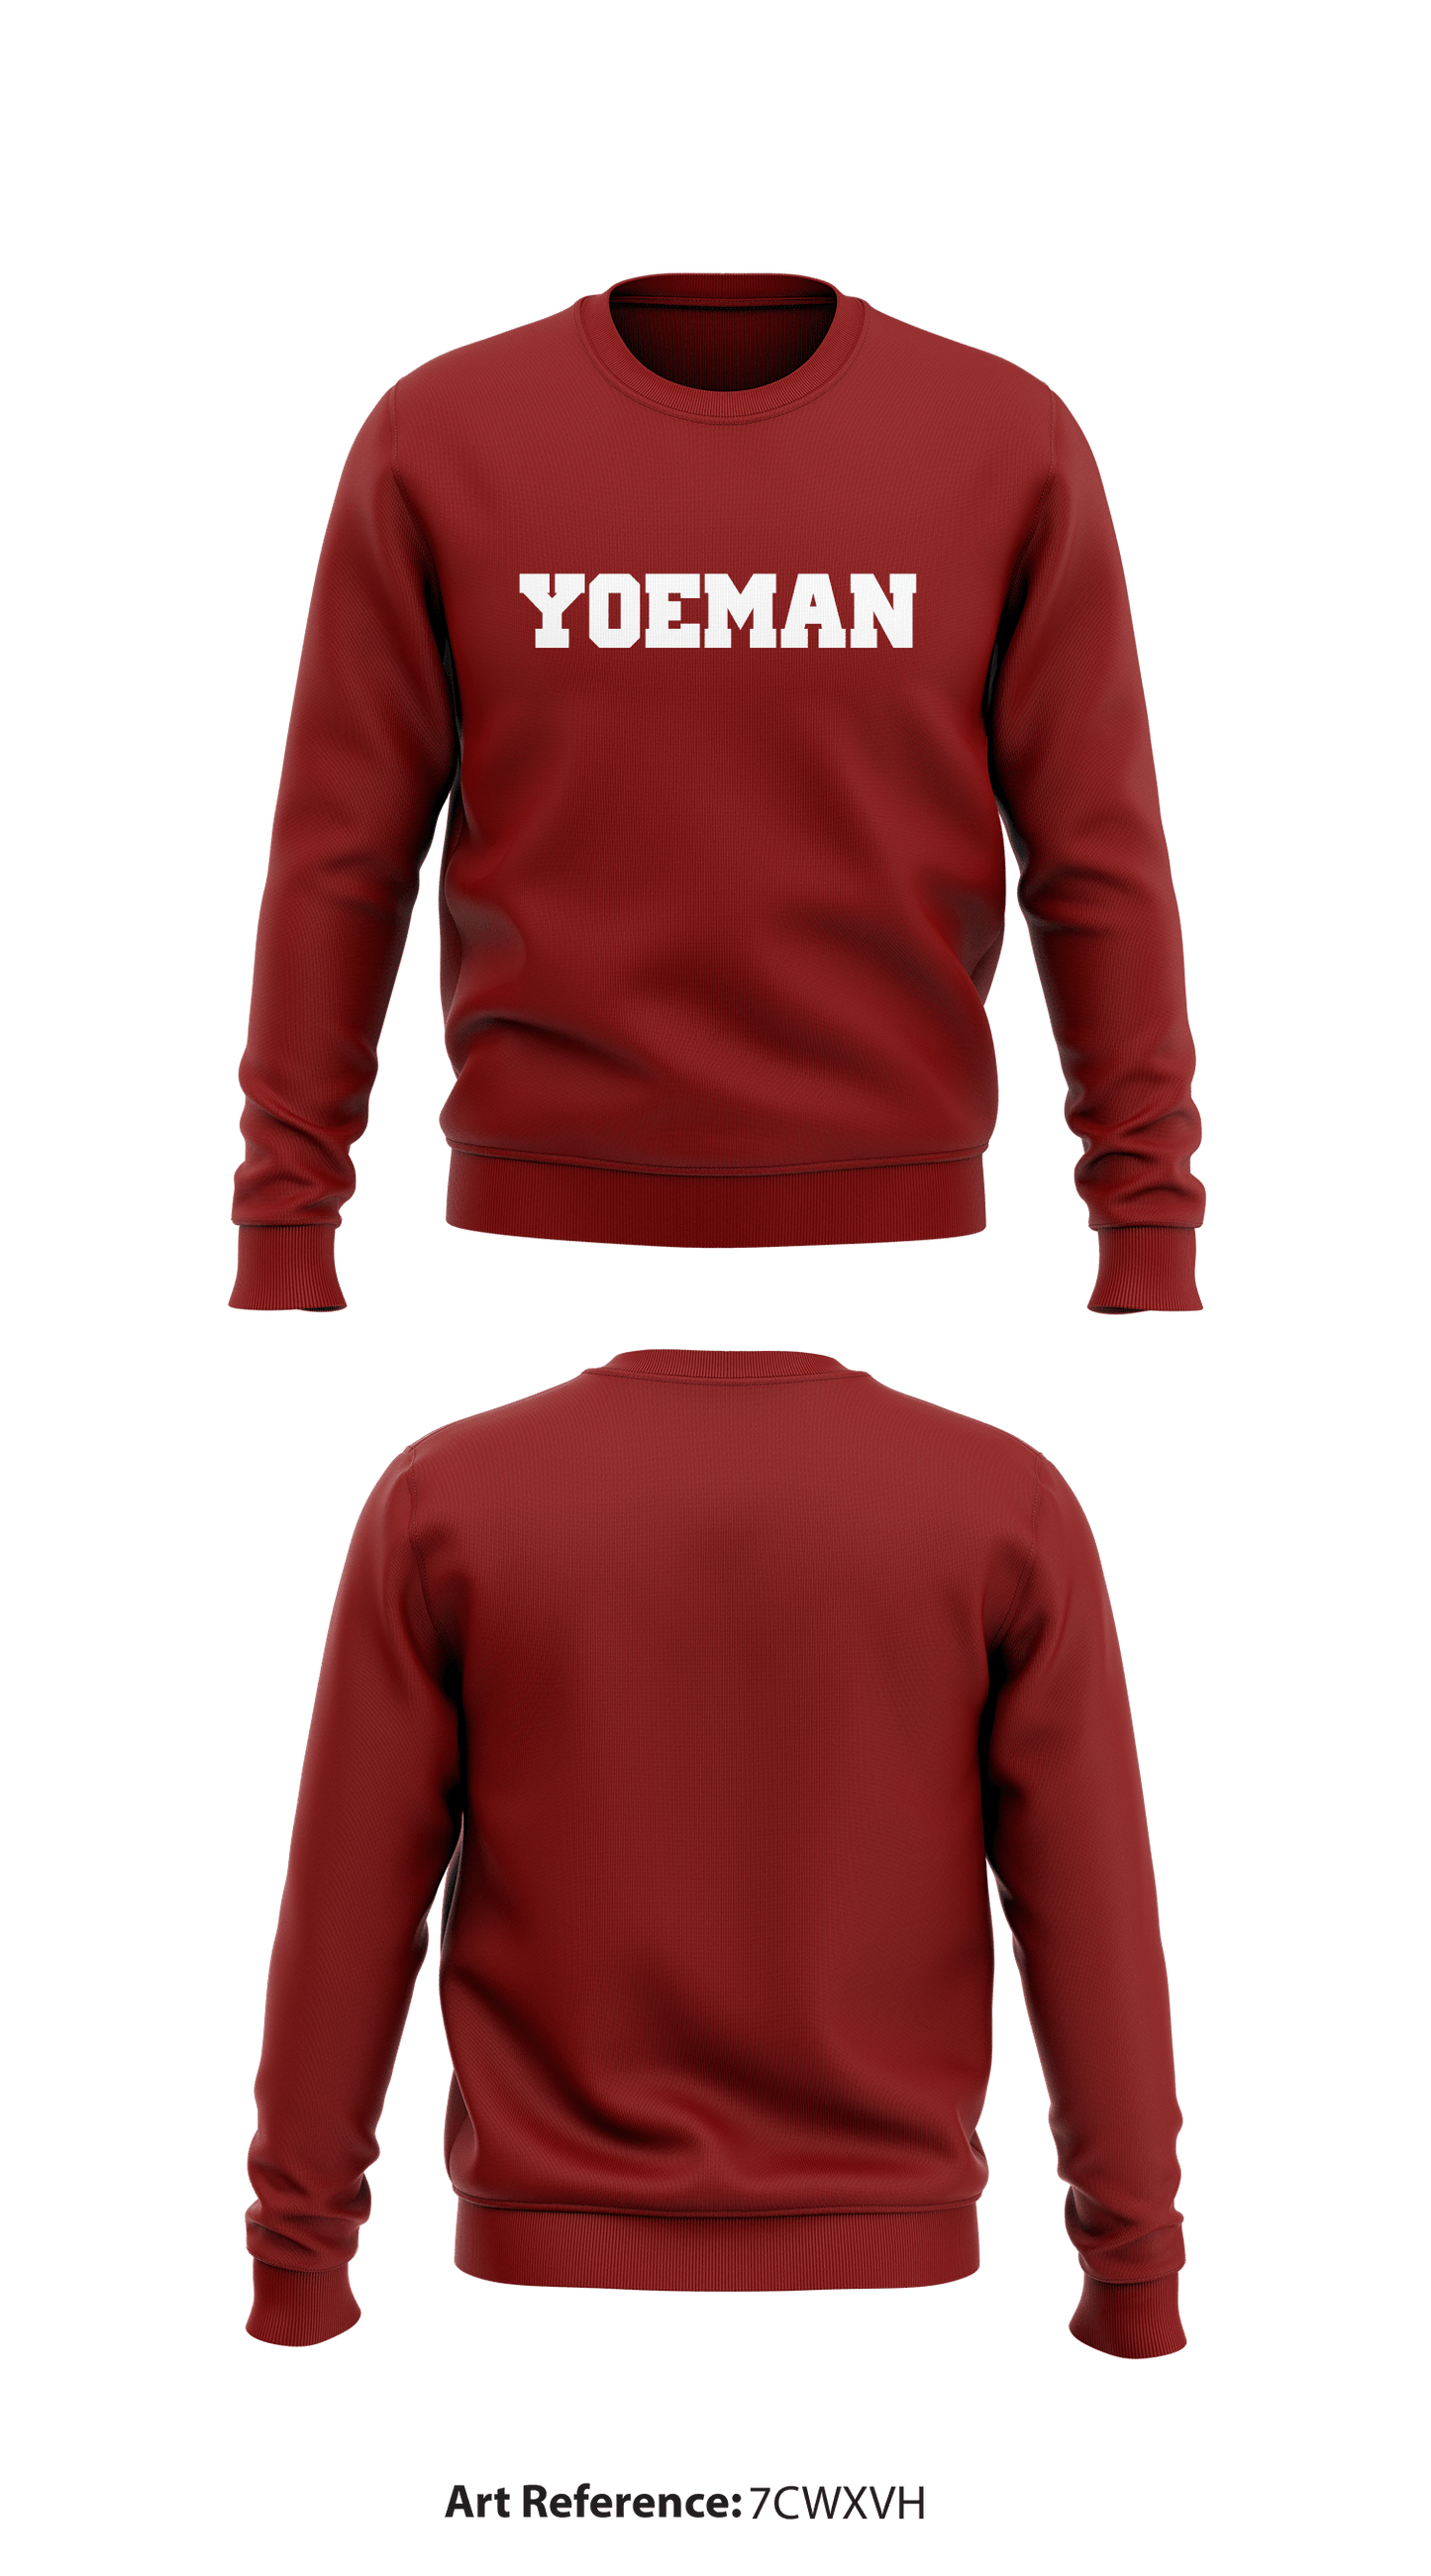 Yoeman Core Men's Crewneck Performance Sweatshirt - 7cWXVh